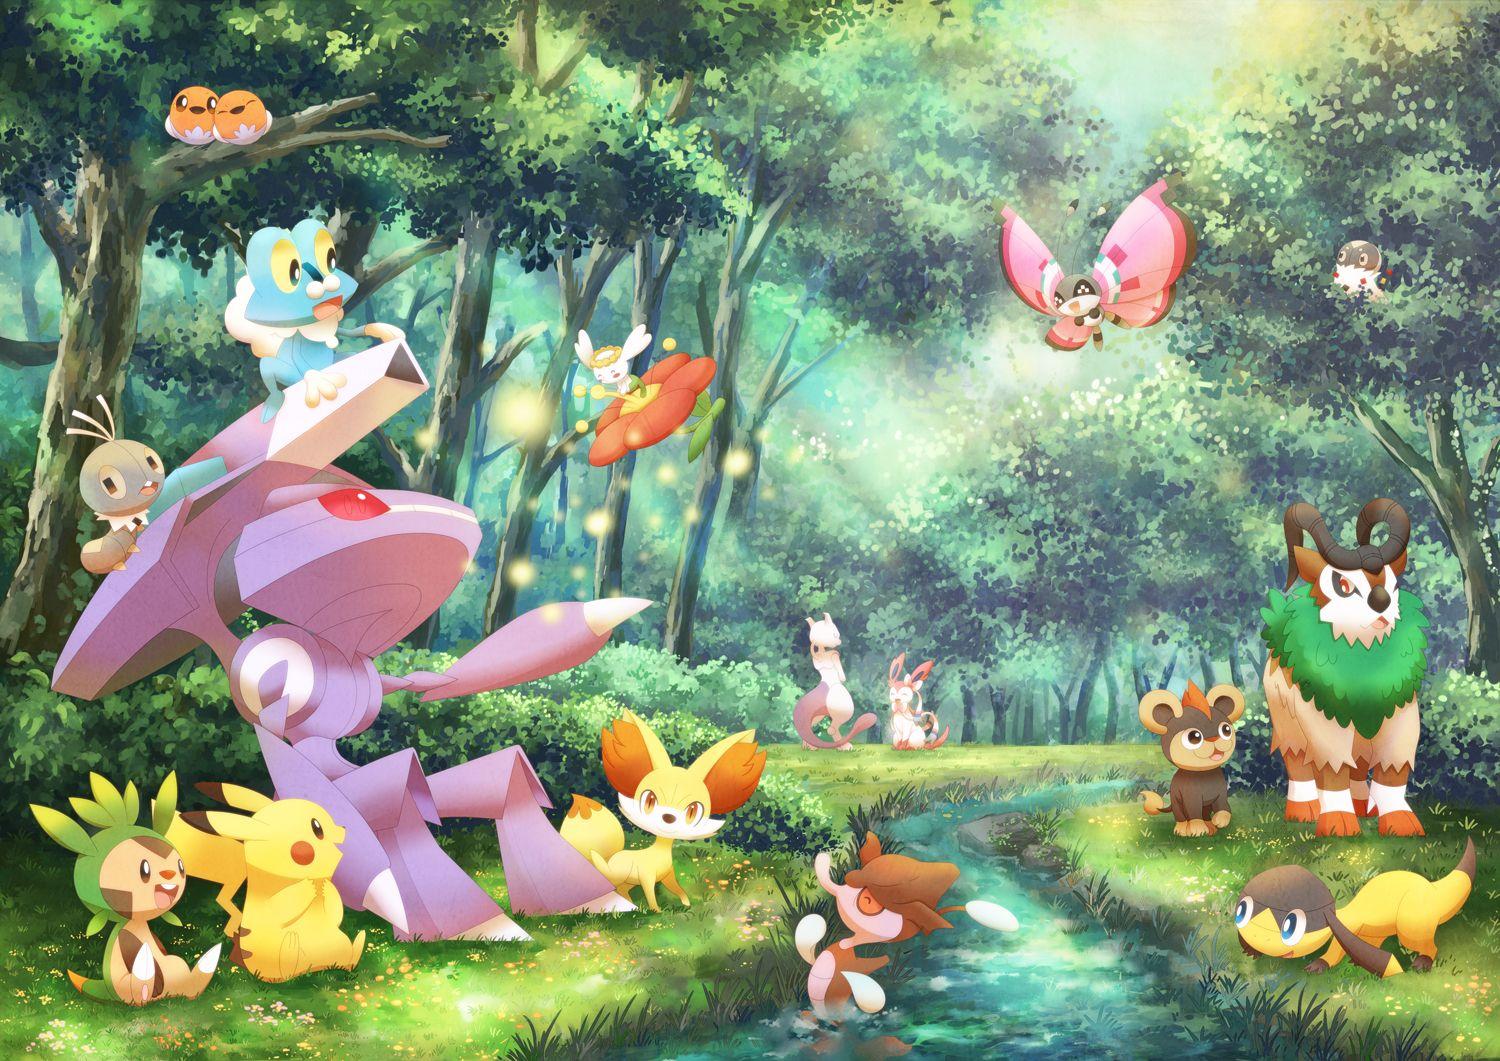 Pokémon the Movie: Genesect and The Legend Awakened Anime